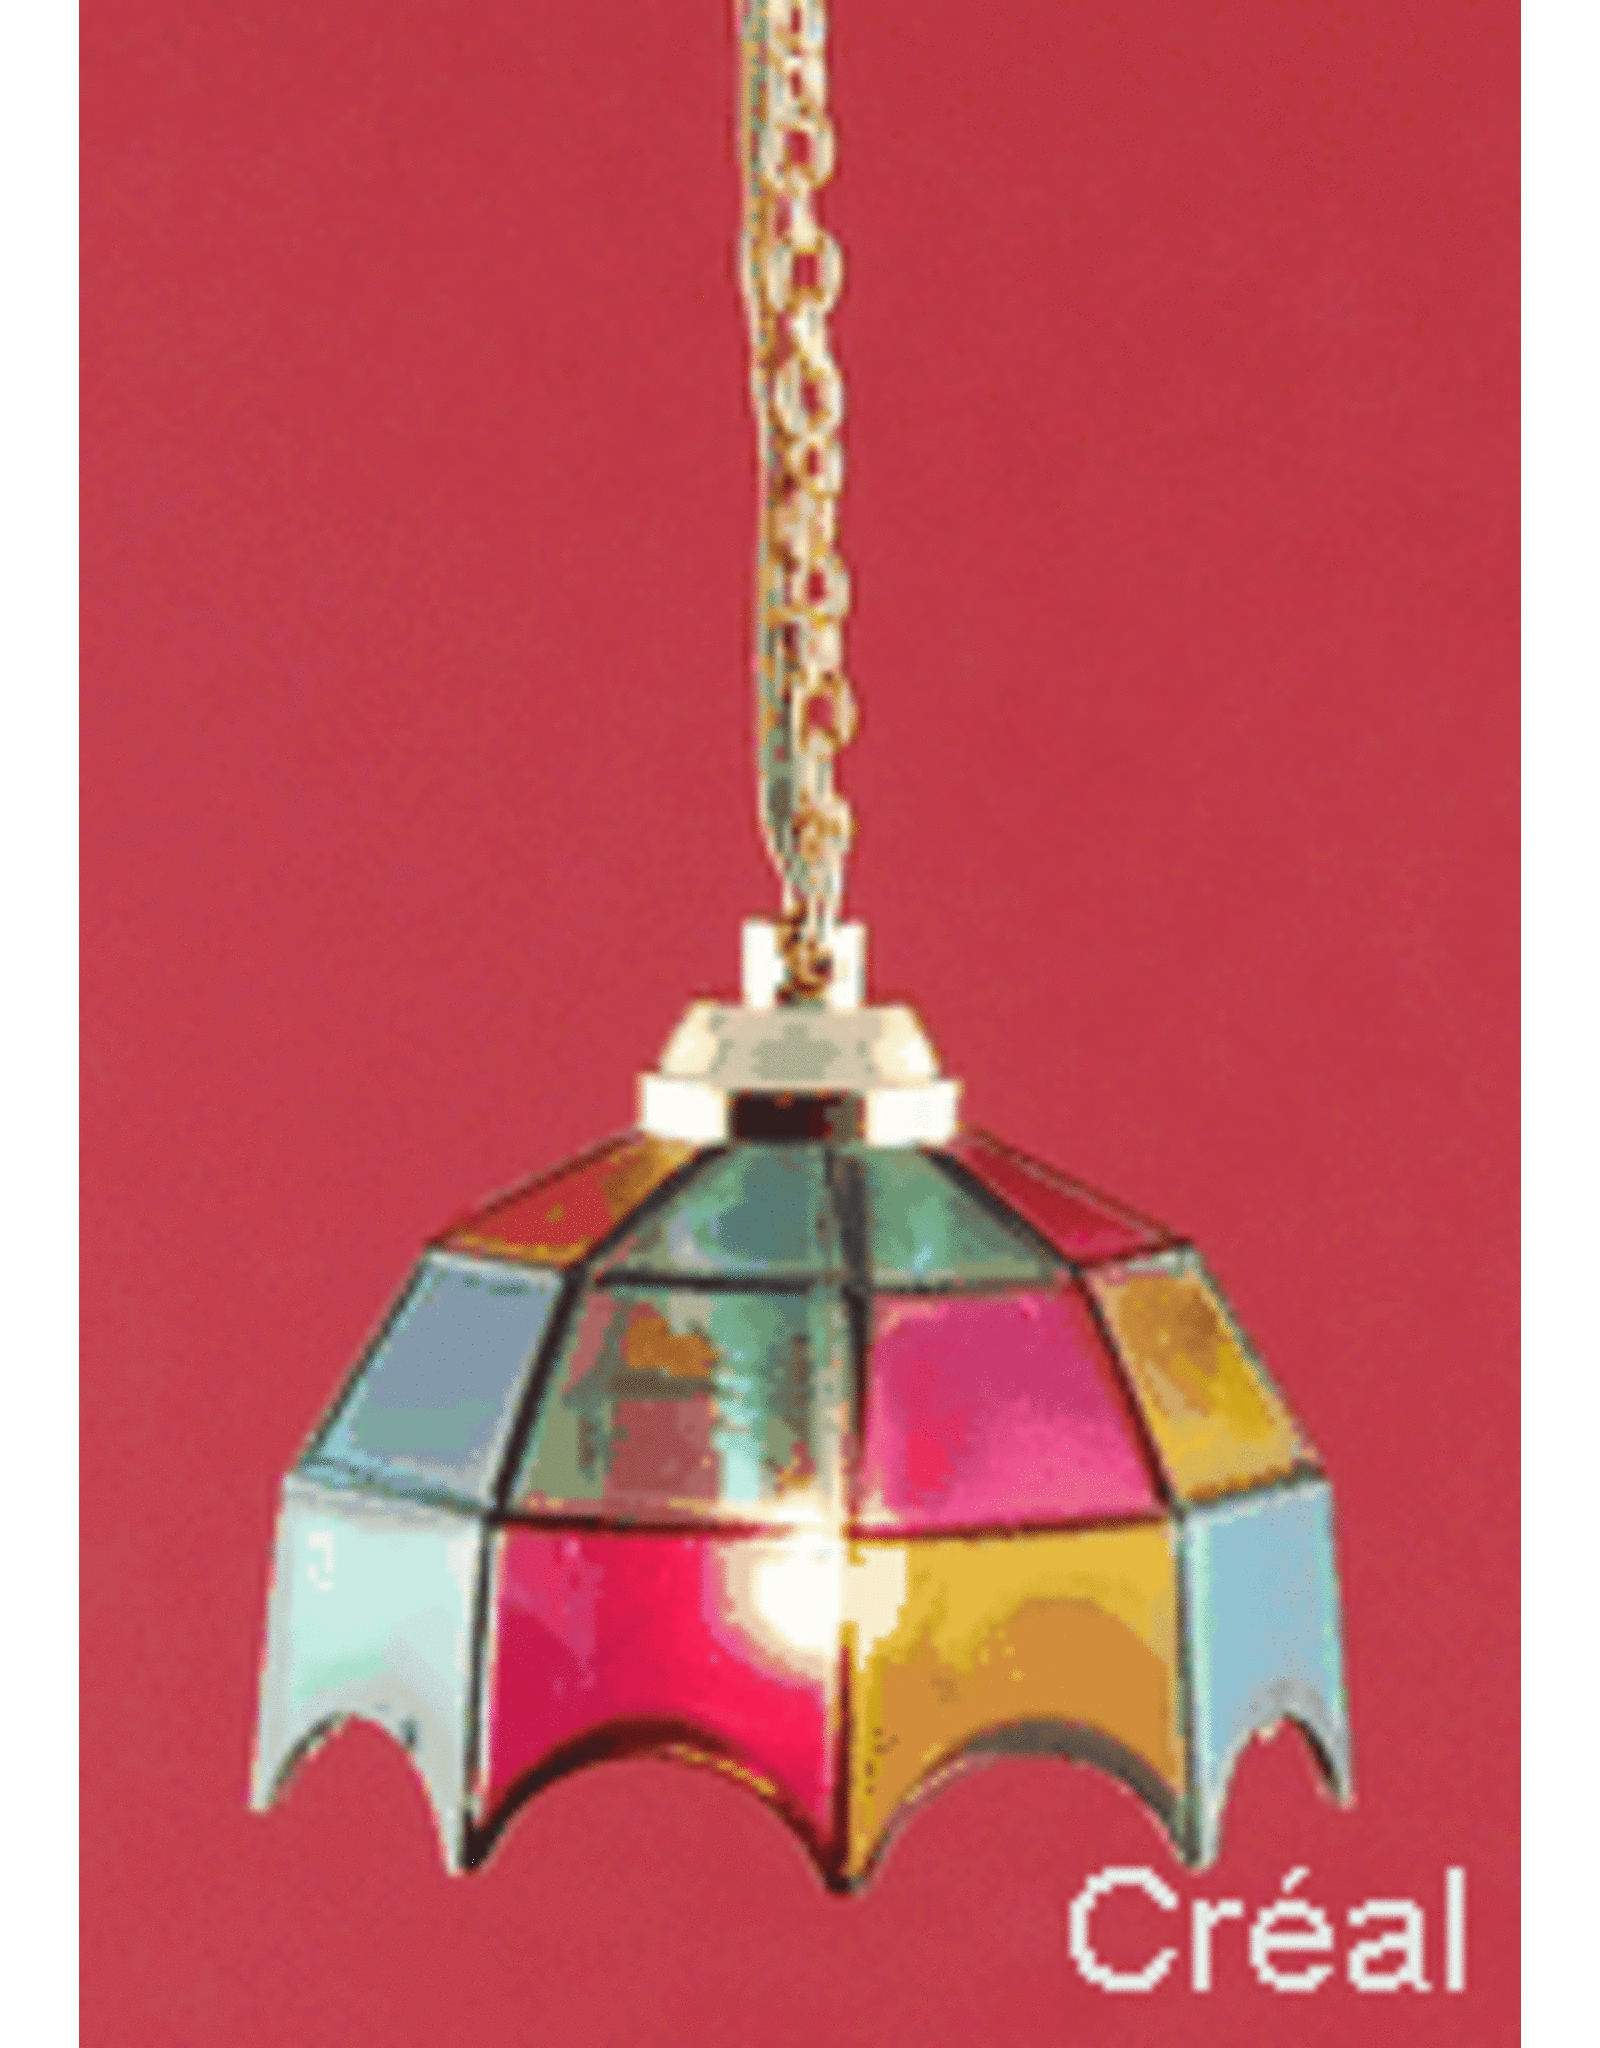 Suspension Tiffany miniature 1:12